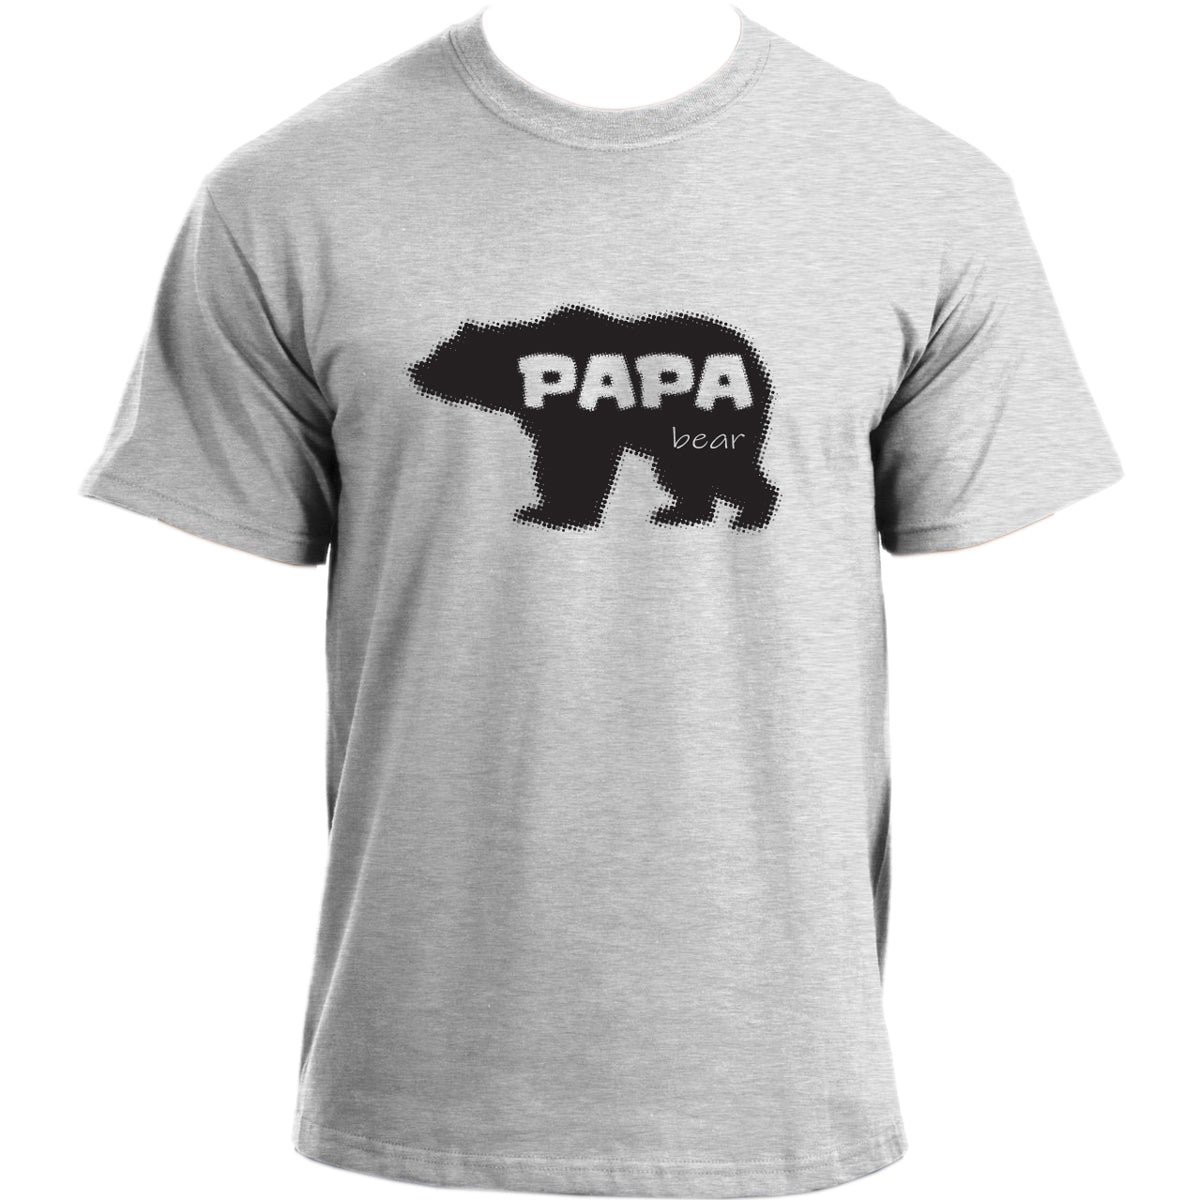 Papa Bear Funny T-Shirt I Father, Grandpa Gift Idea T-Shirt I Humor Novelty T Shirt for Dads